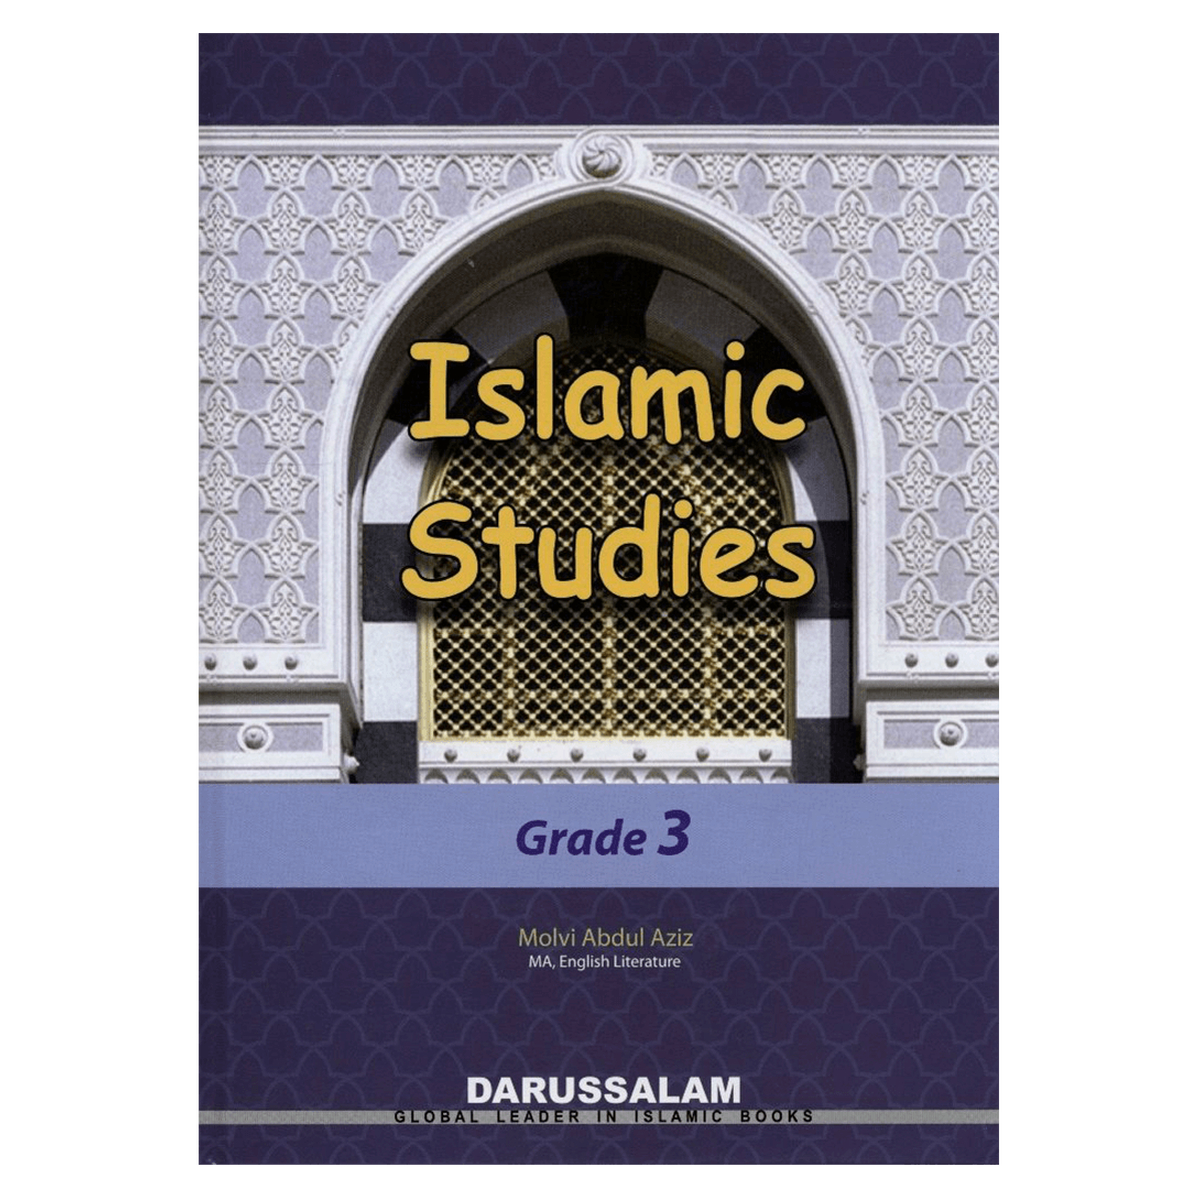 Islamic Studies Grade 3